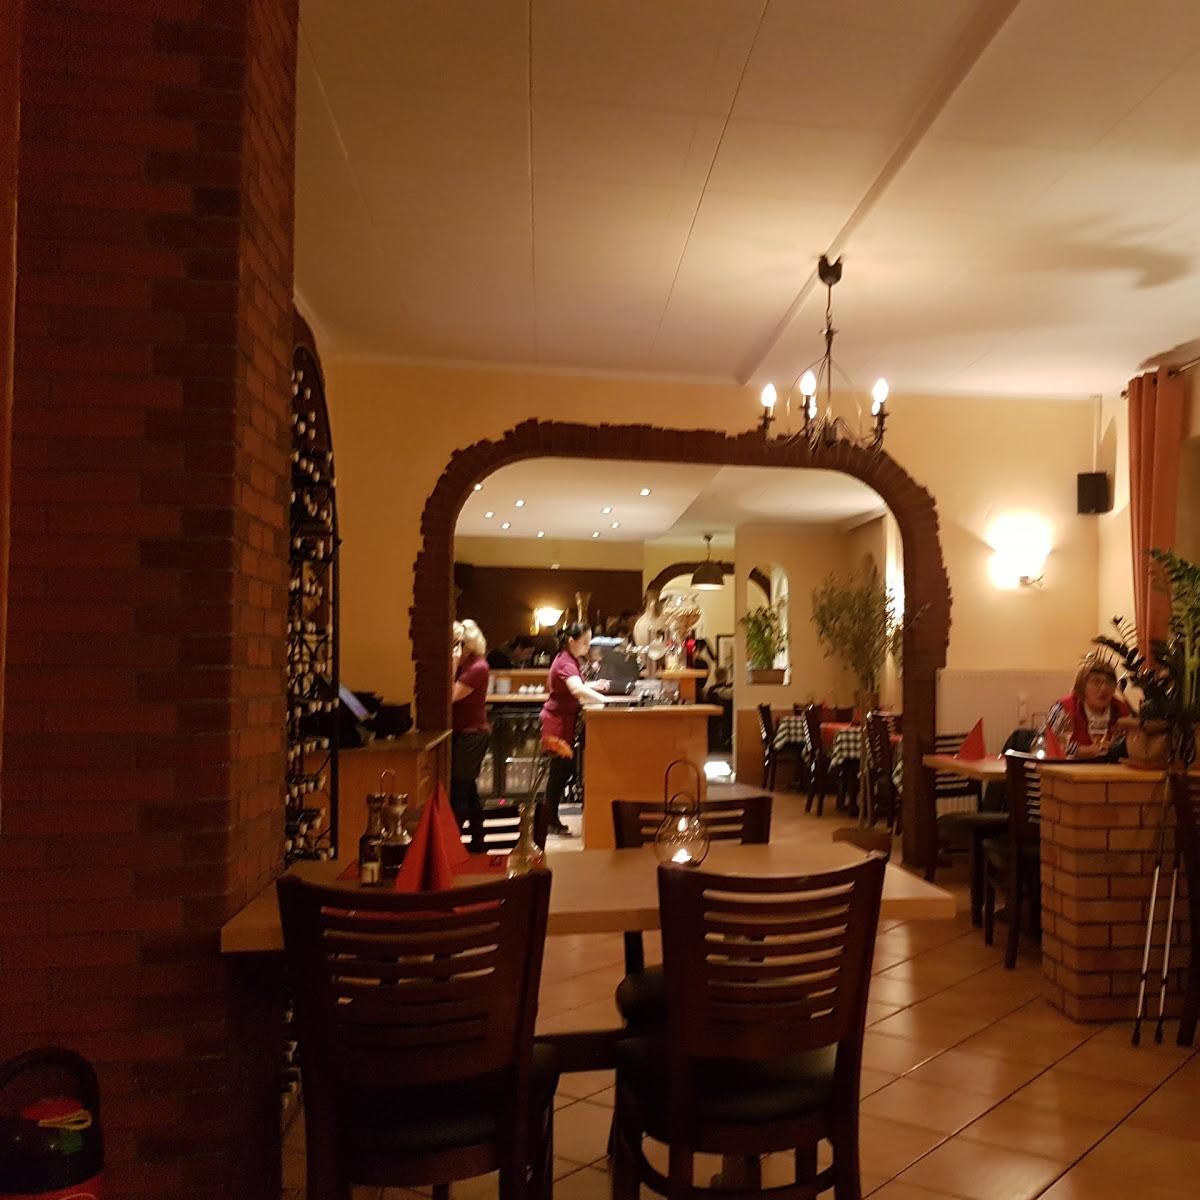 Restaurant "La Rustica" in Bissendorf